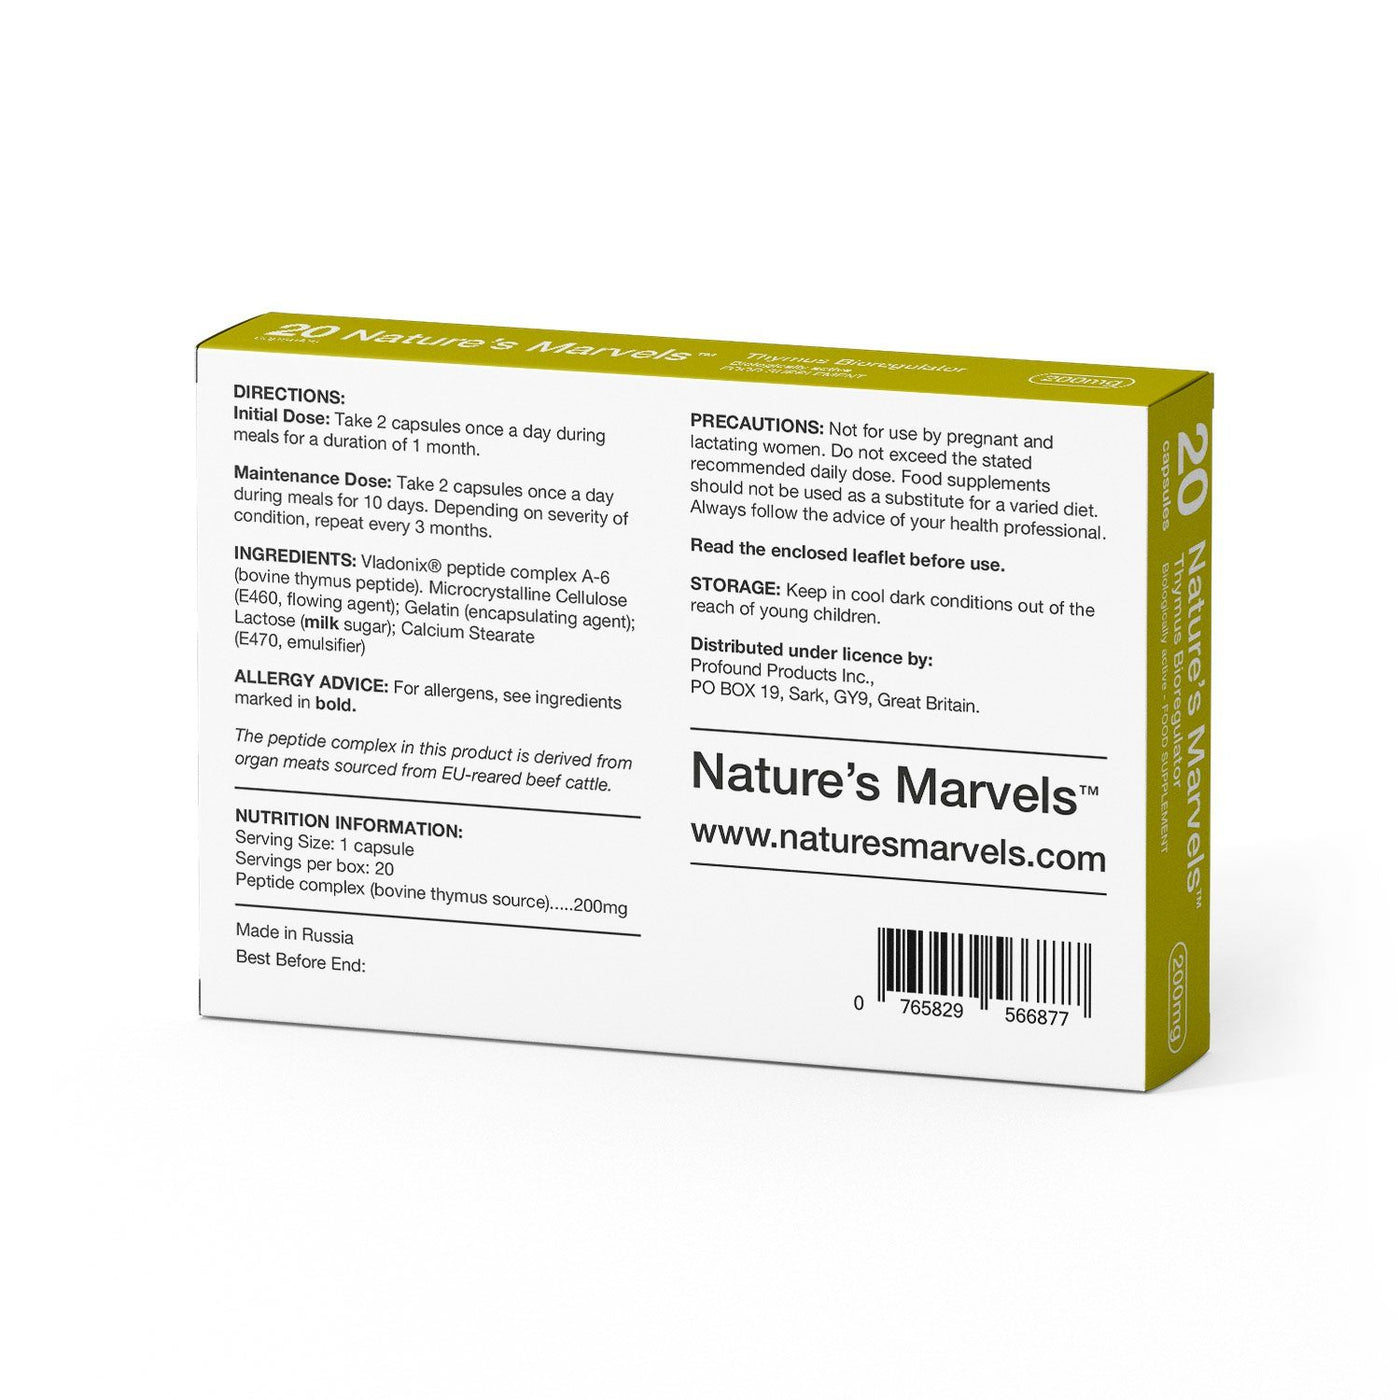 Nature’s Marvels – Thymus Bioregulator with Vladonix 20 Caps